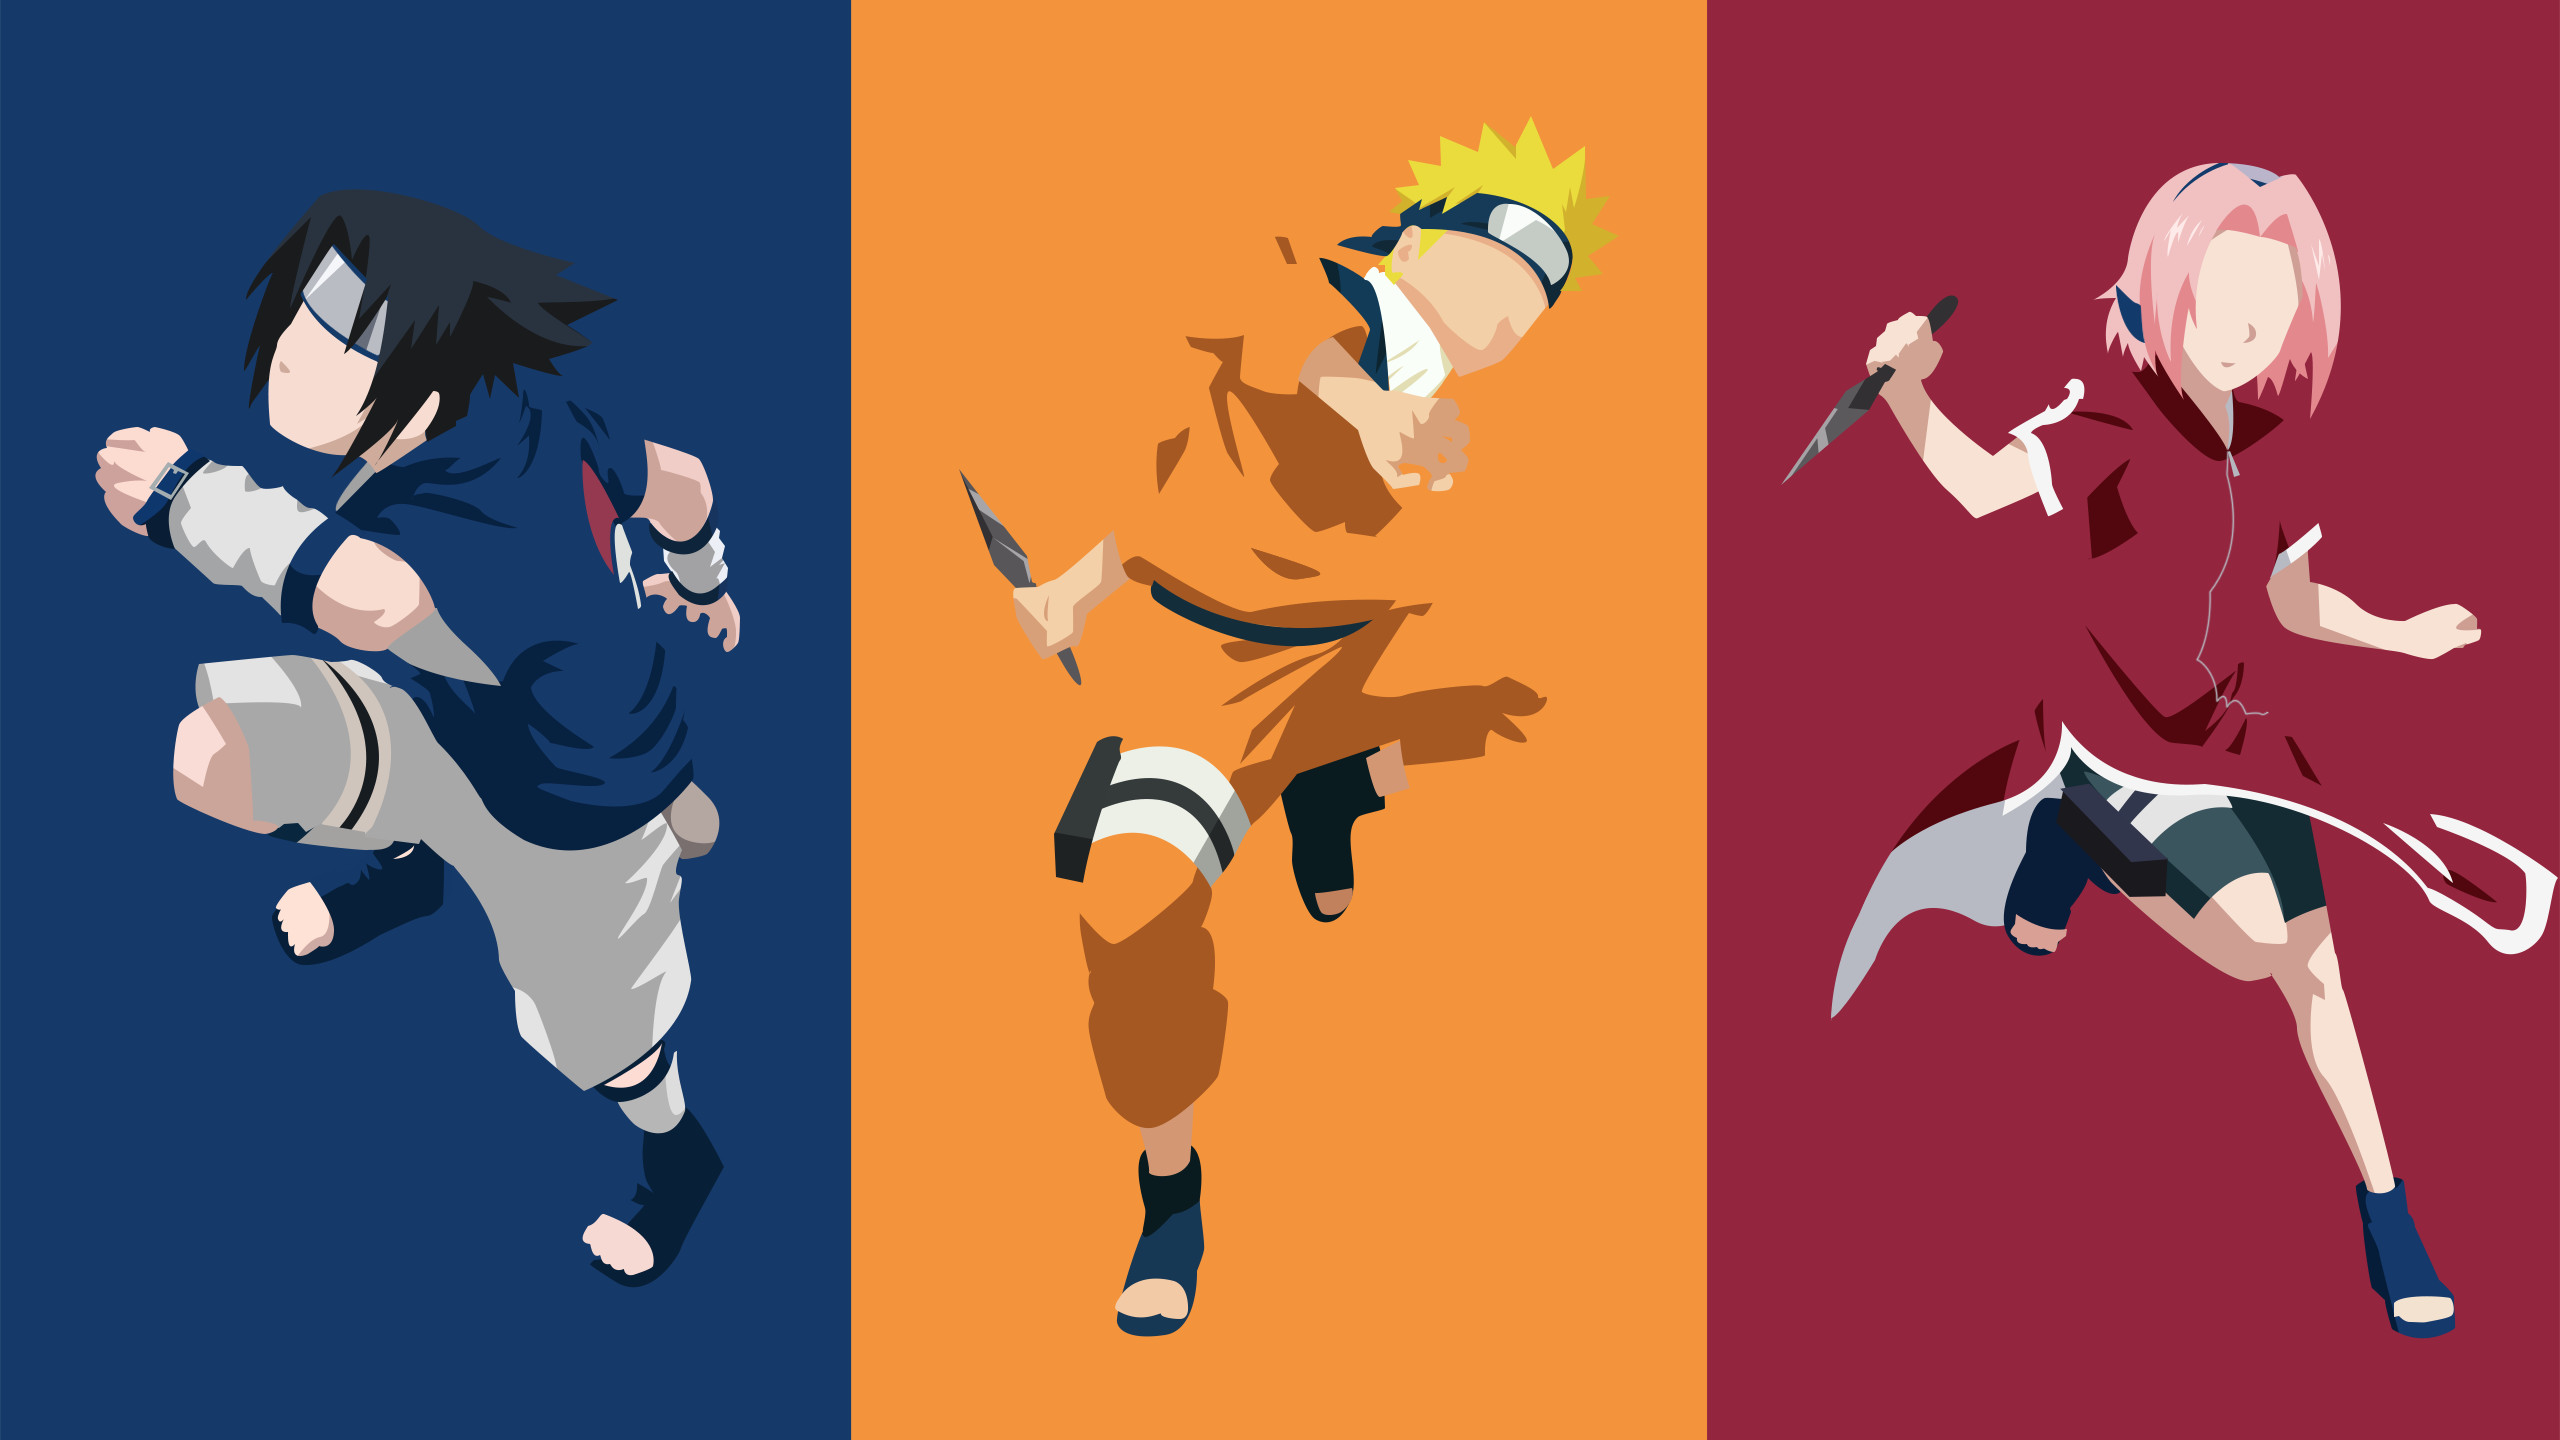 2560x1440 Naruto, Sasuke and Sakura minimalist wallpaper = Naruto + Sasuke + Sakura  [kid] minimalist design